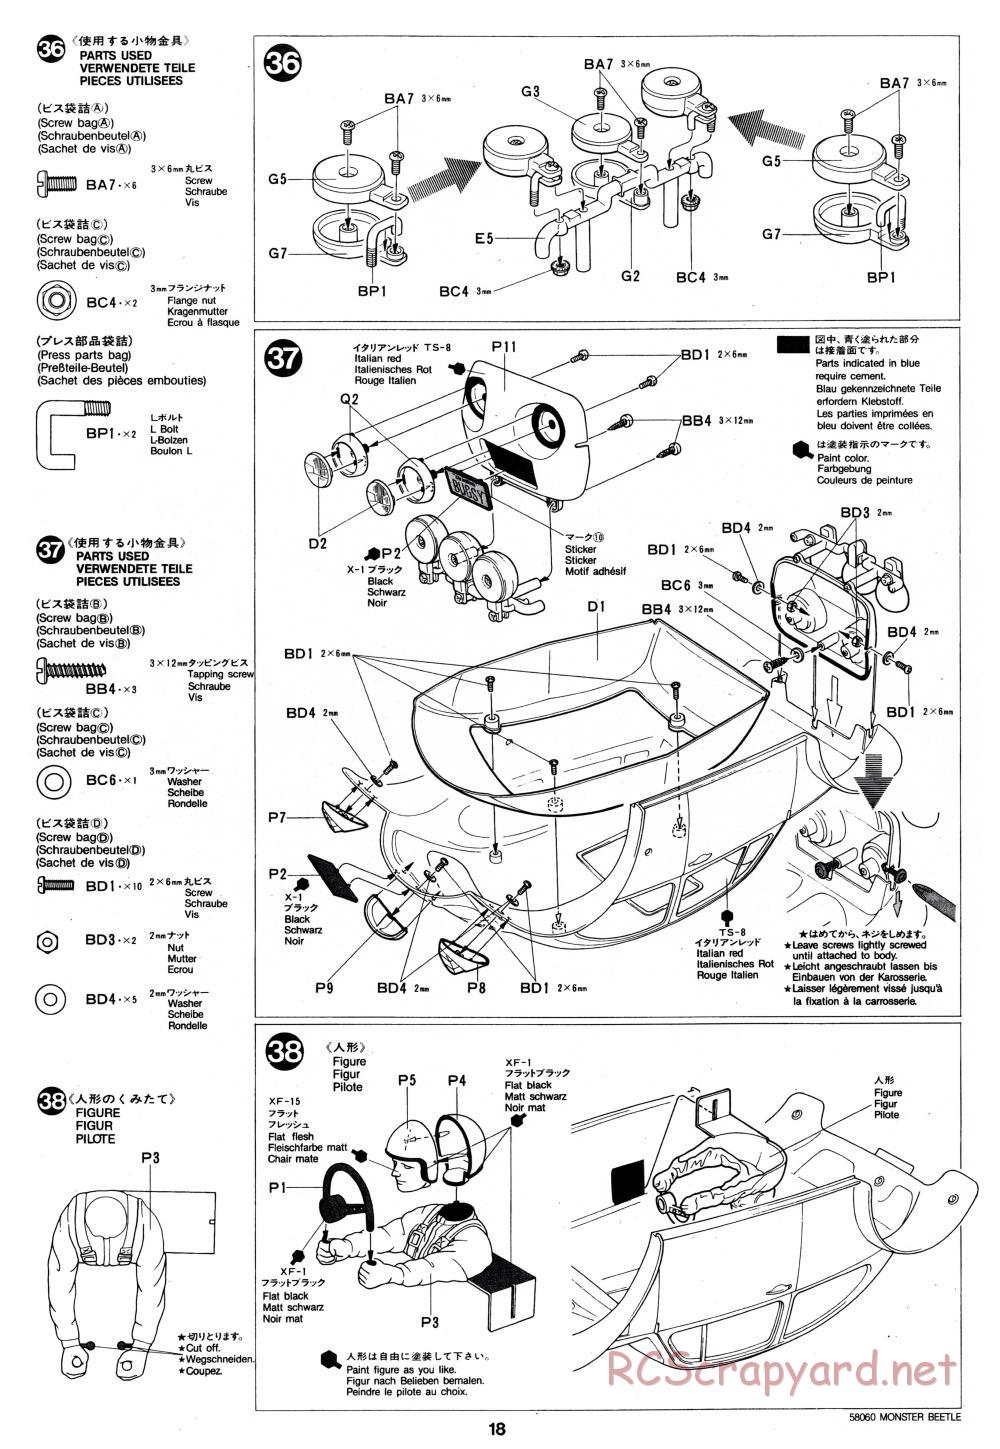 Tamiya - Monster Beetle - 58060 - Manual - Page 18